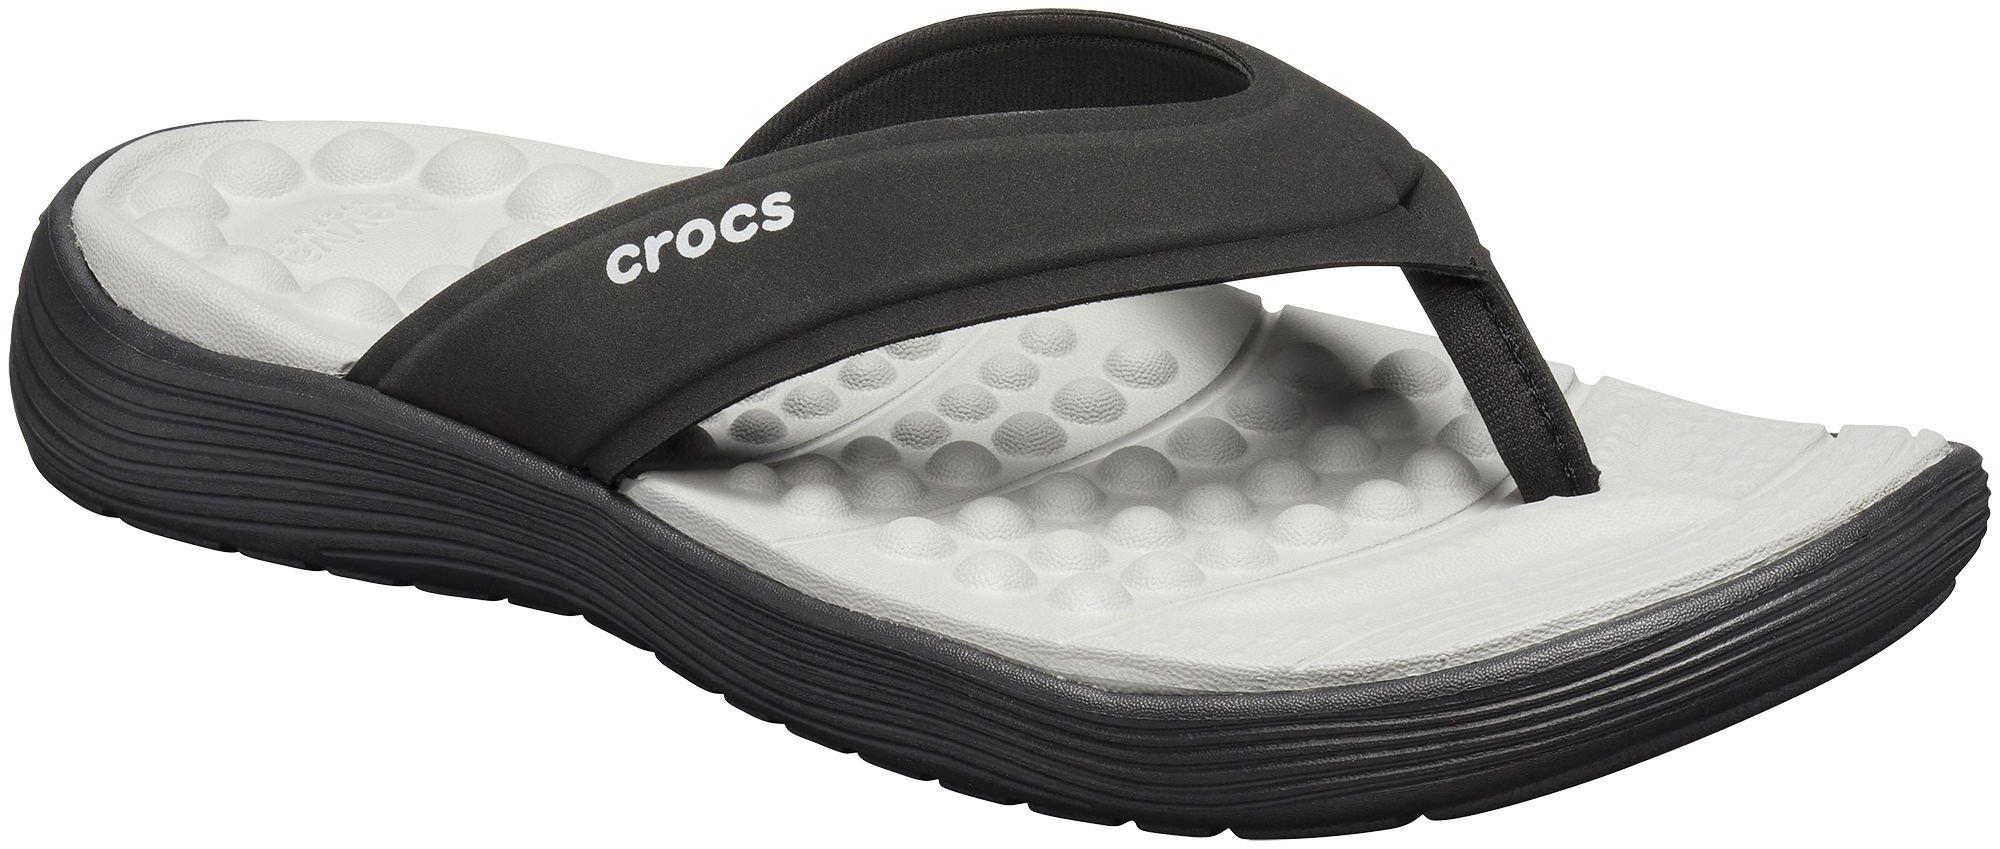 Crocs Womens Reviva Thong Sandals 